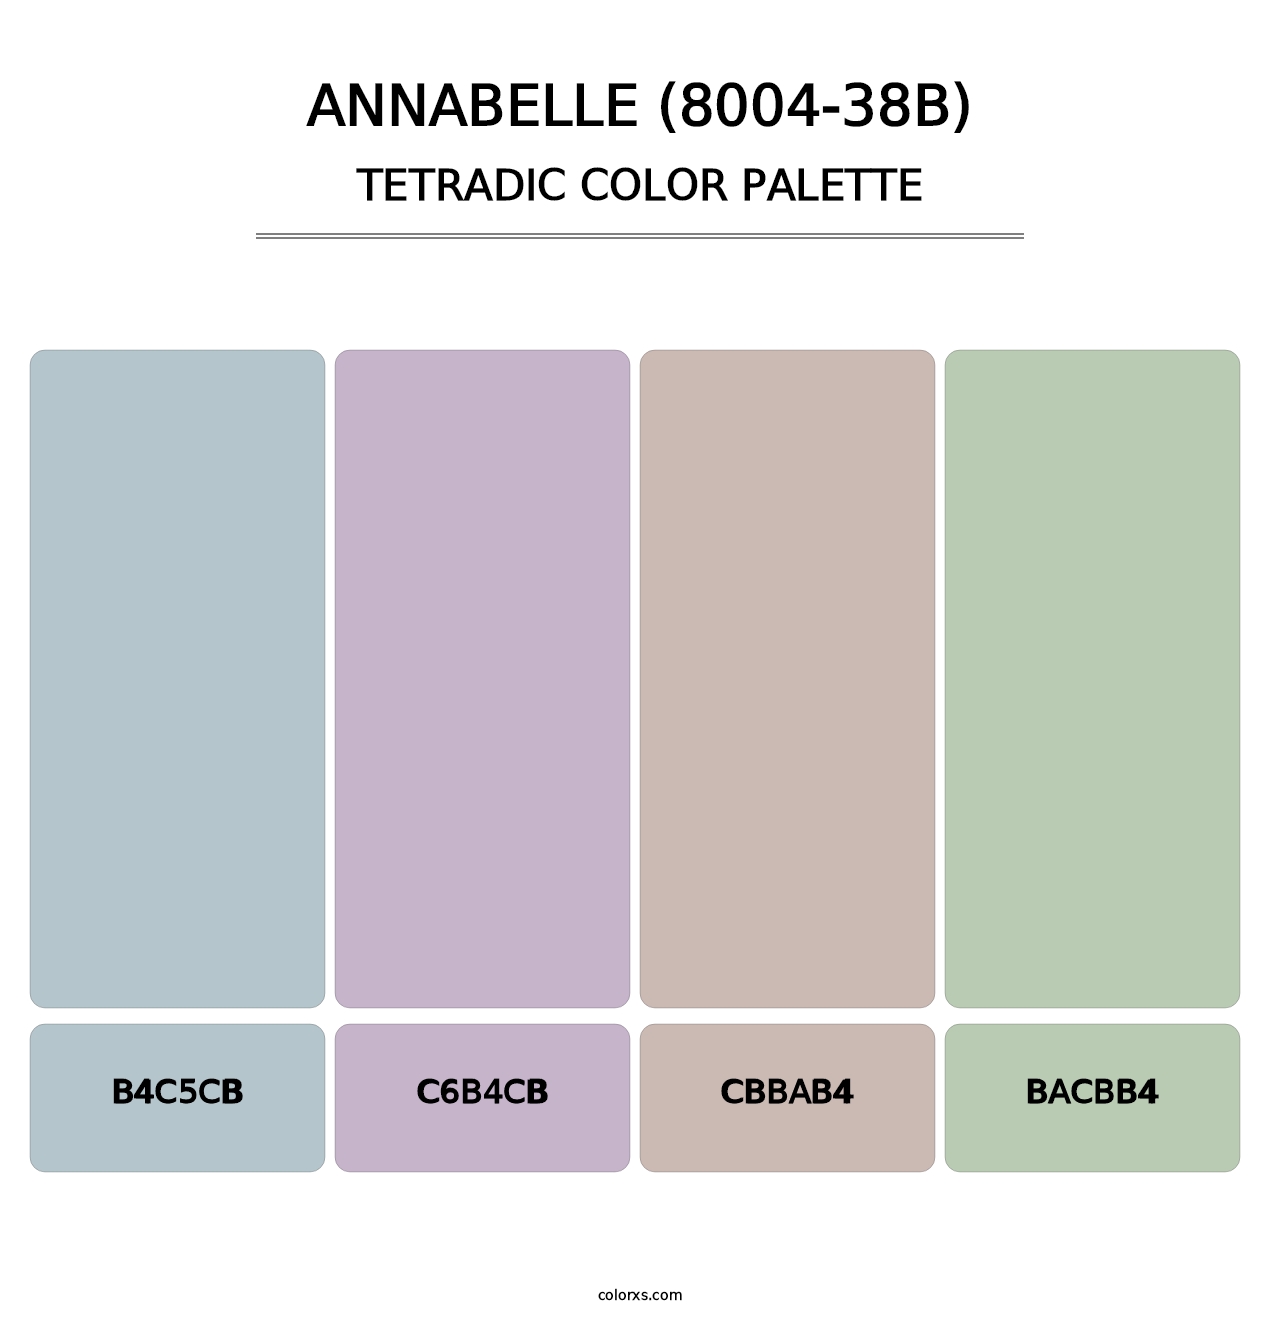 Annabelle (8004-38B) - Tetradic Color Palette